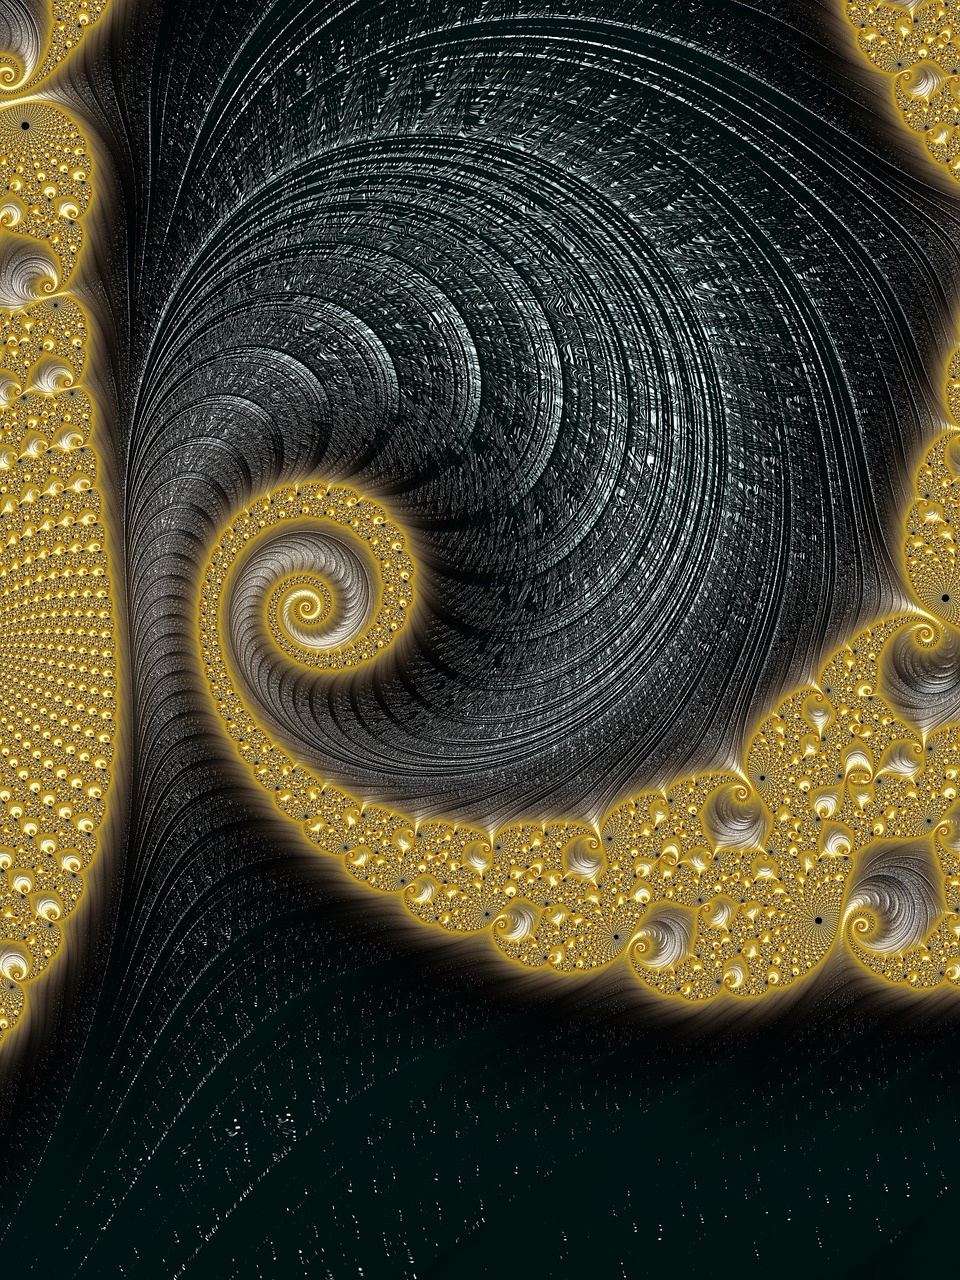 fractal design art free photo